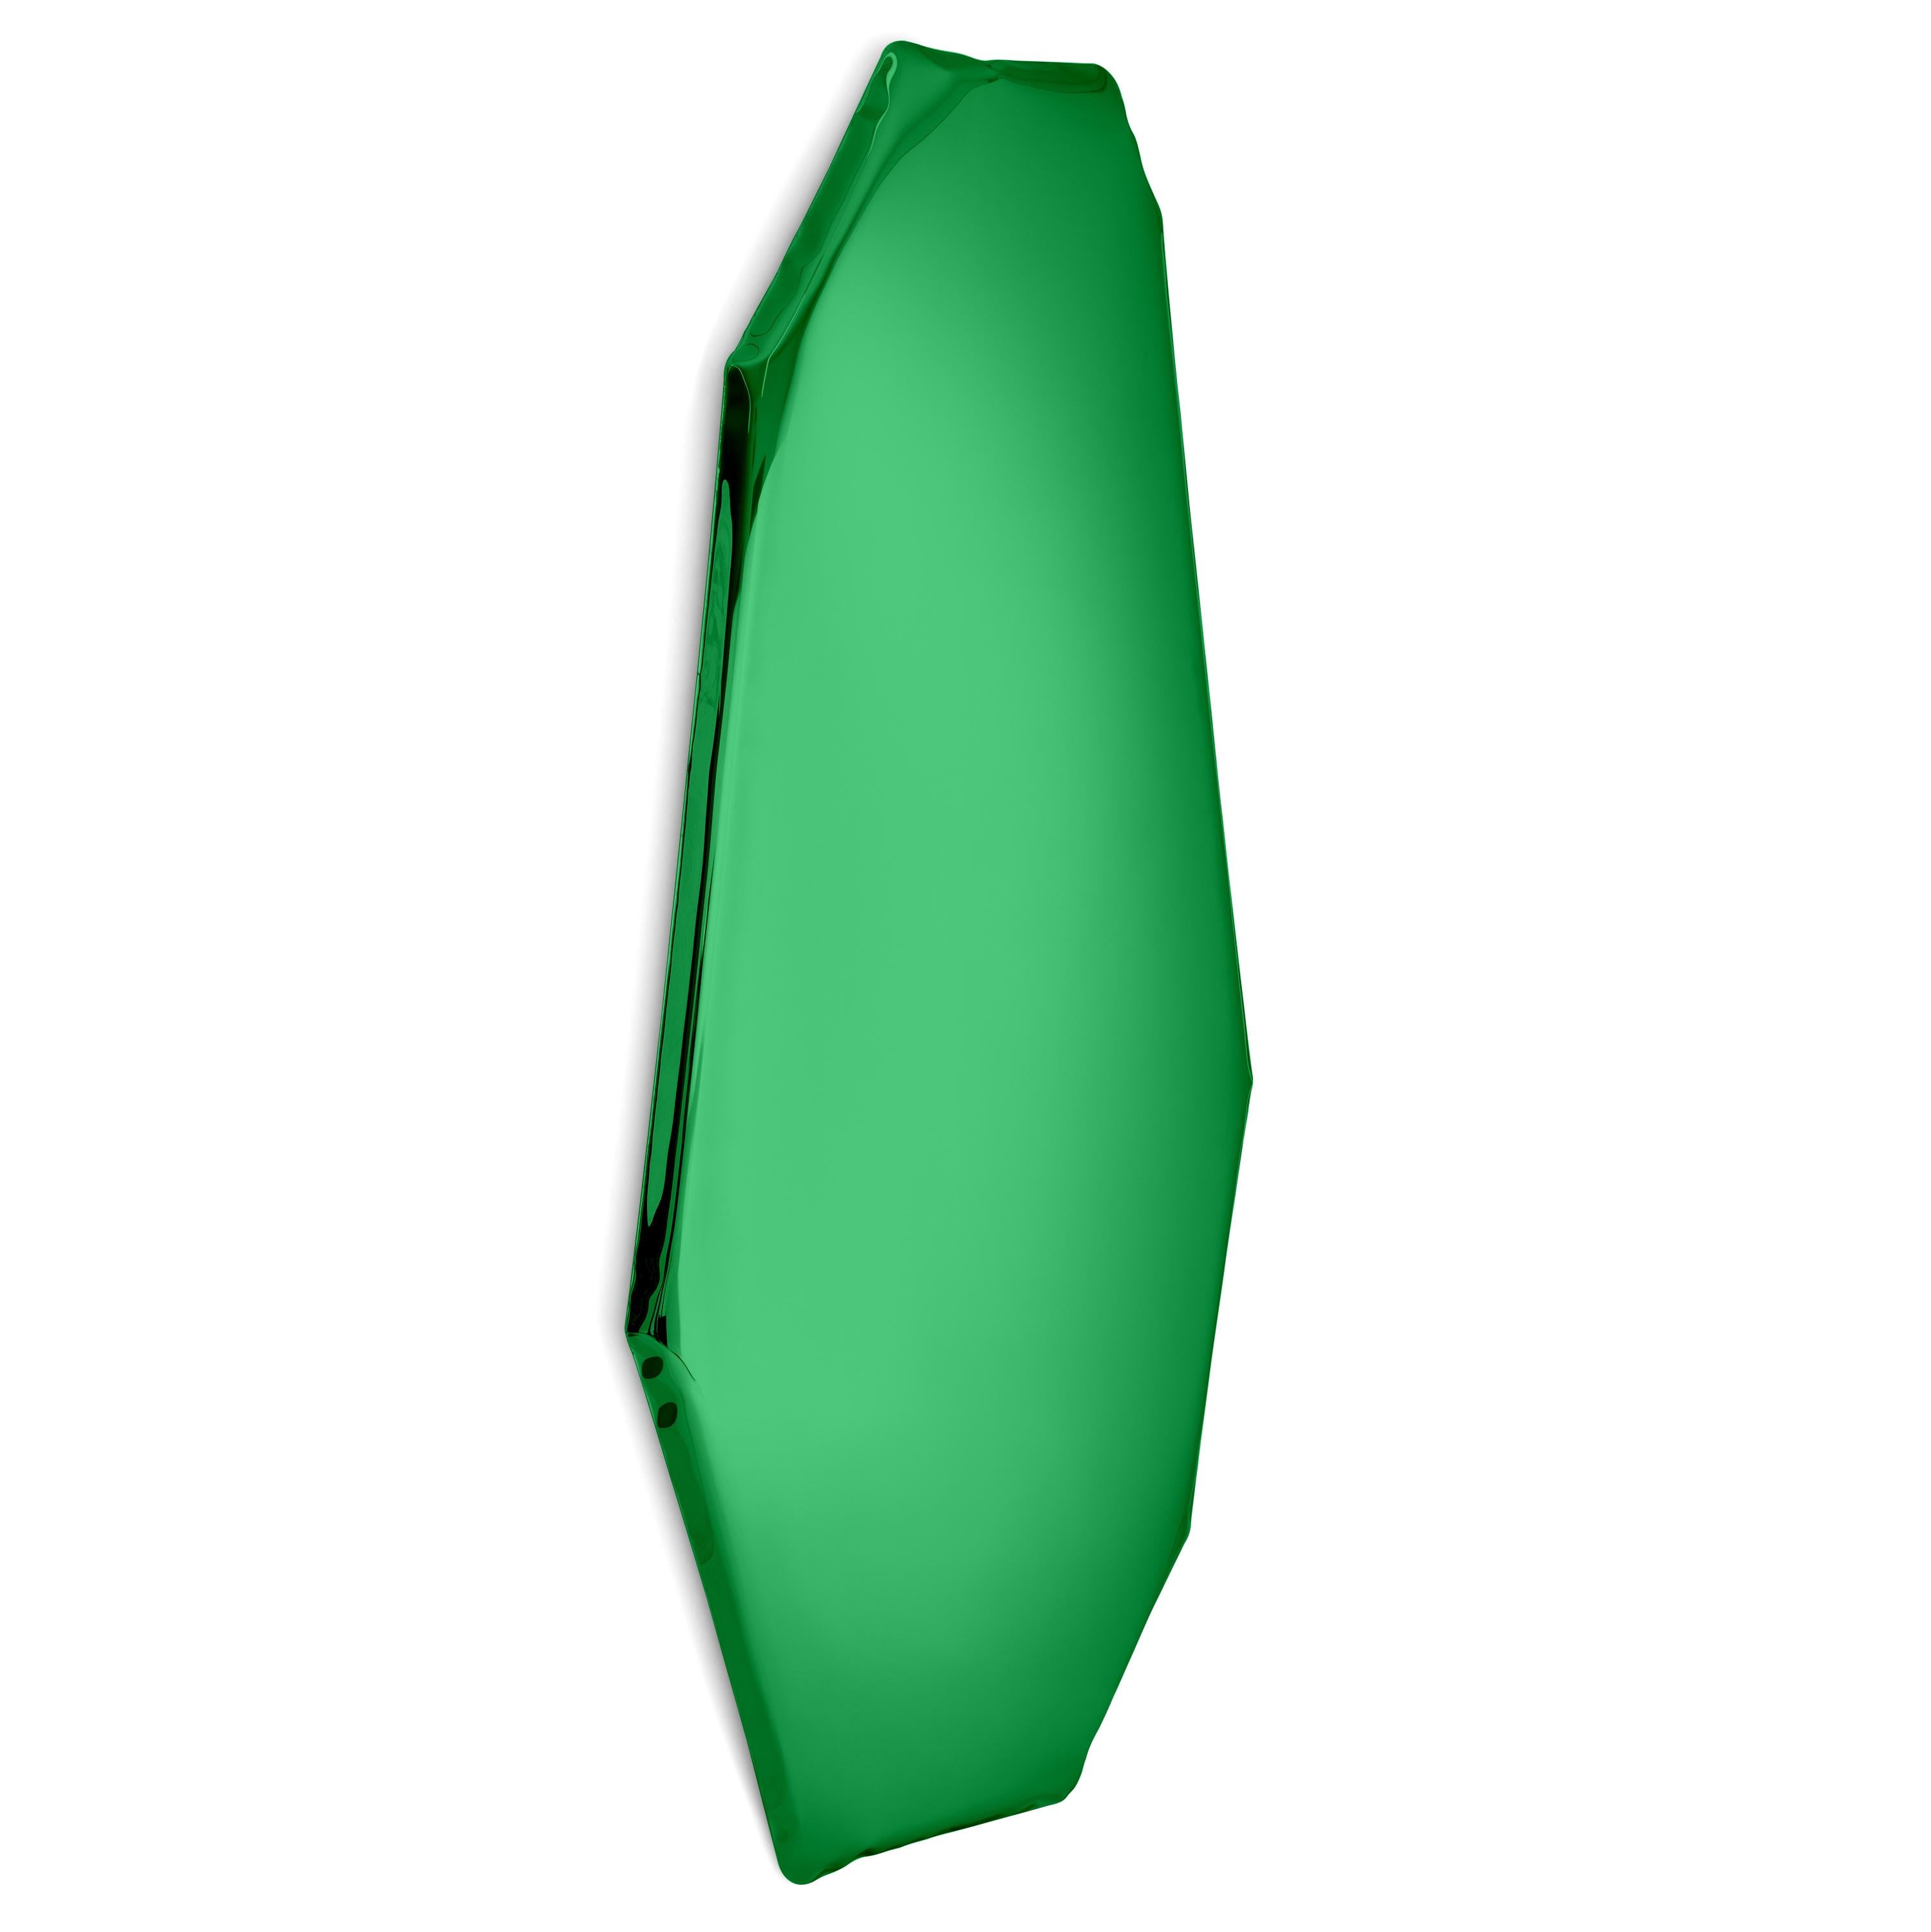 Miroir mural sculptural Emerald C1 de Zieta
Dimensions : D 6 x L 99 x H 225 cm 
Matériau : Acier inoxydable. 
Finition : Emeraude.
Disponible en finitions : Acier inoxydable, Deep Space Blue, Emerald, Saphire, Saphire/Emerald, Dark Matter et Red